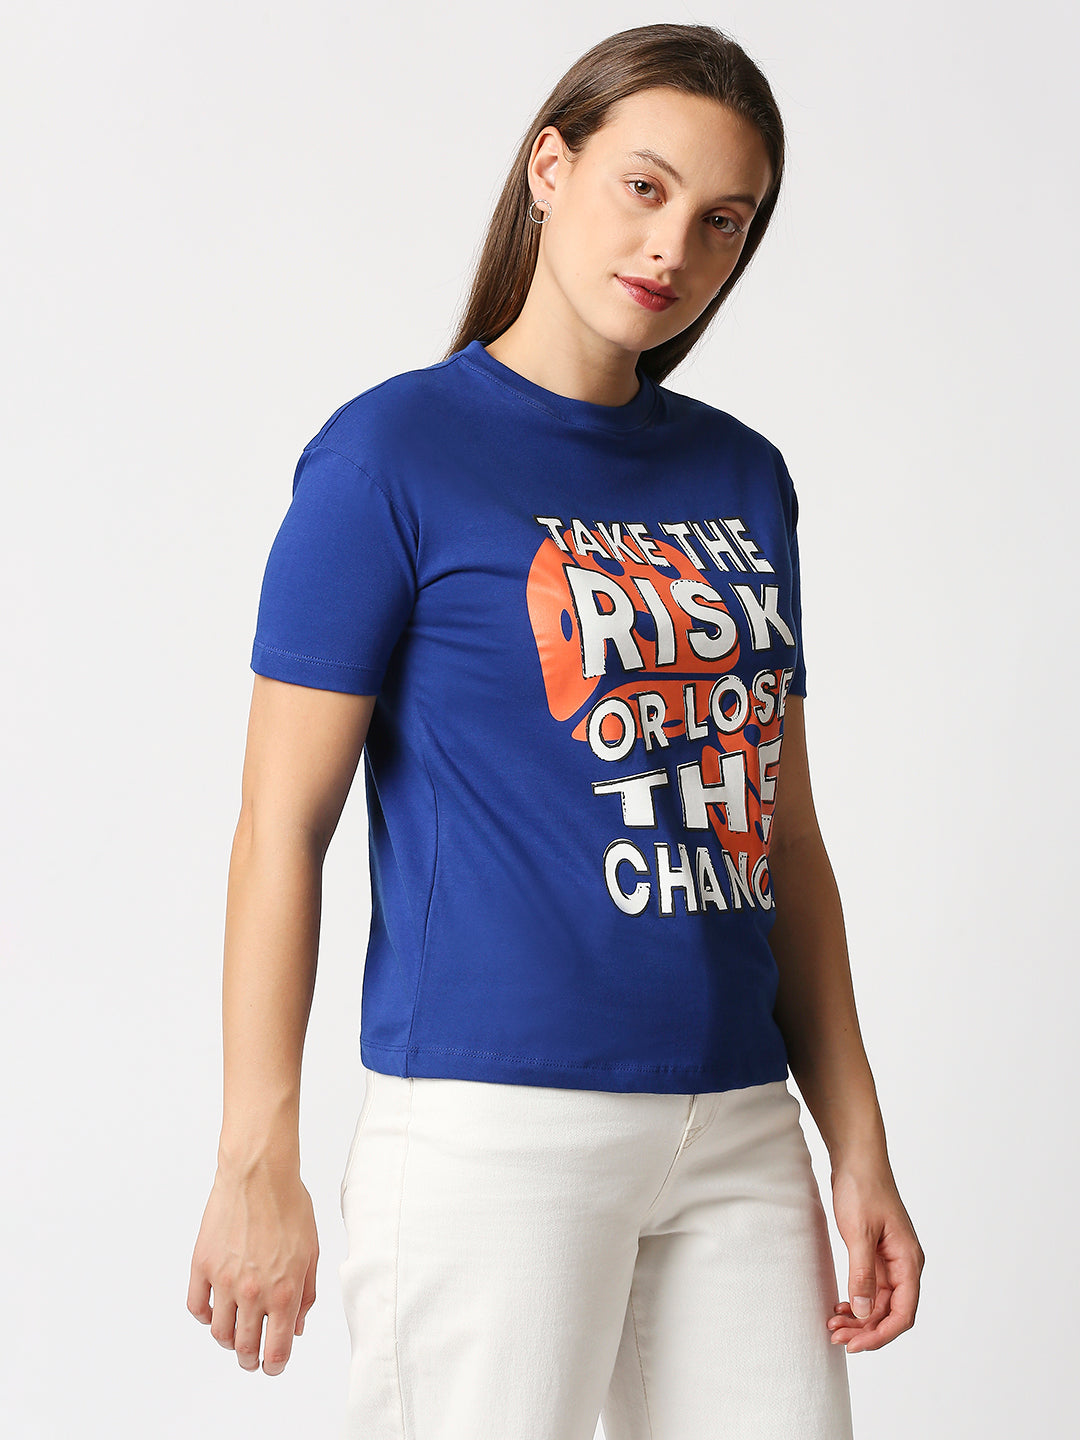 Buy Womenâ€™s Comfort fit Royal Blue Chest print T-shirt.